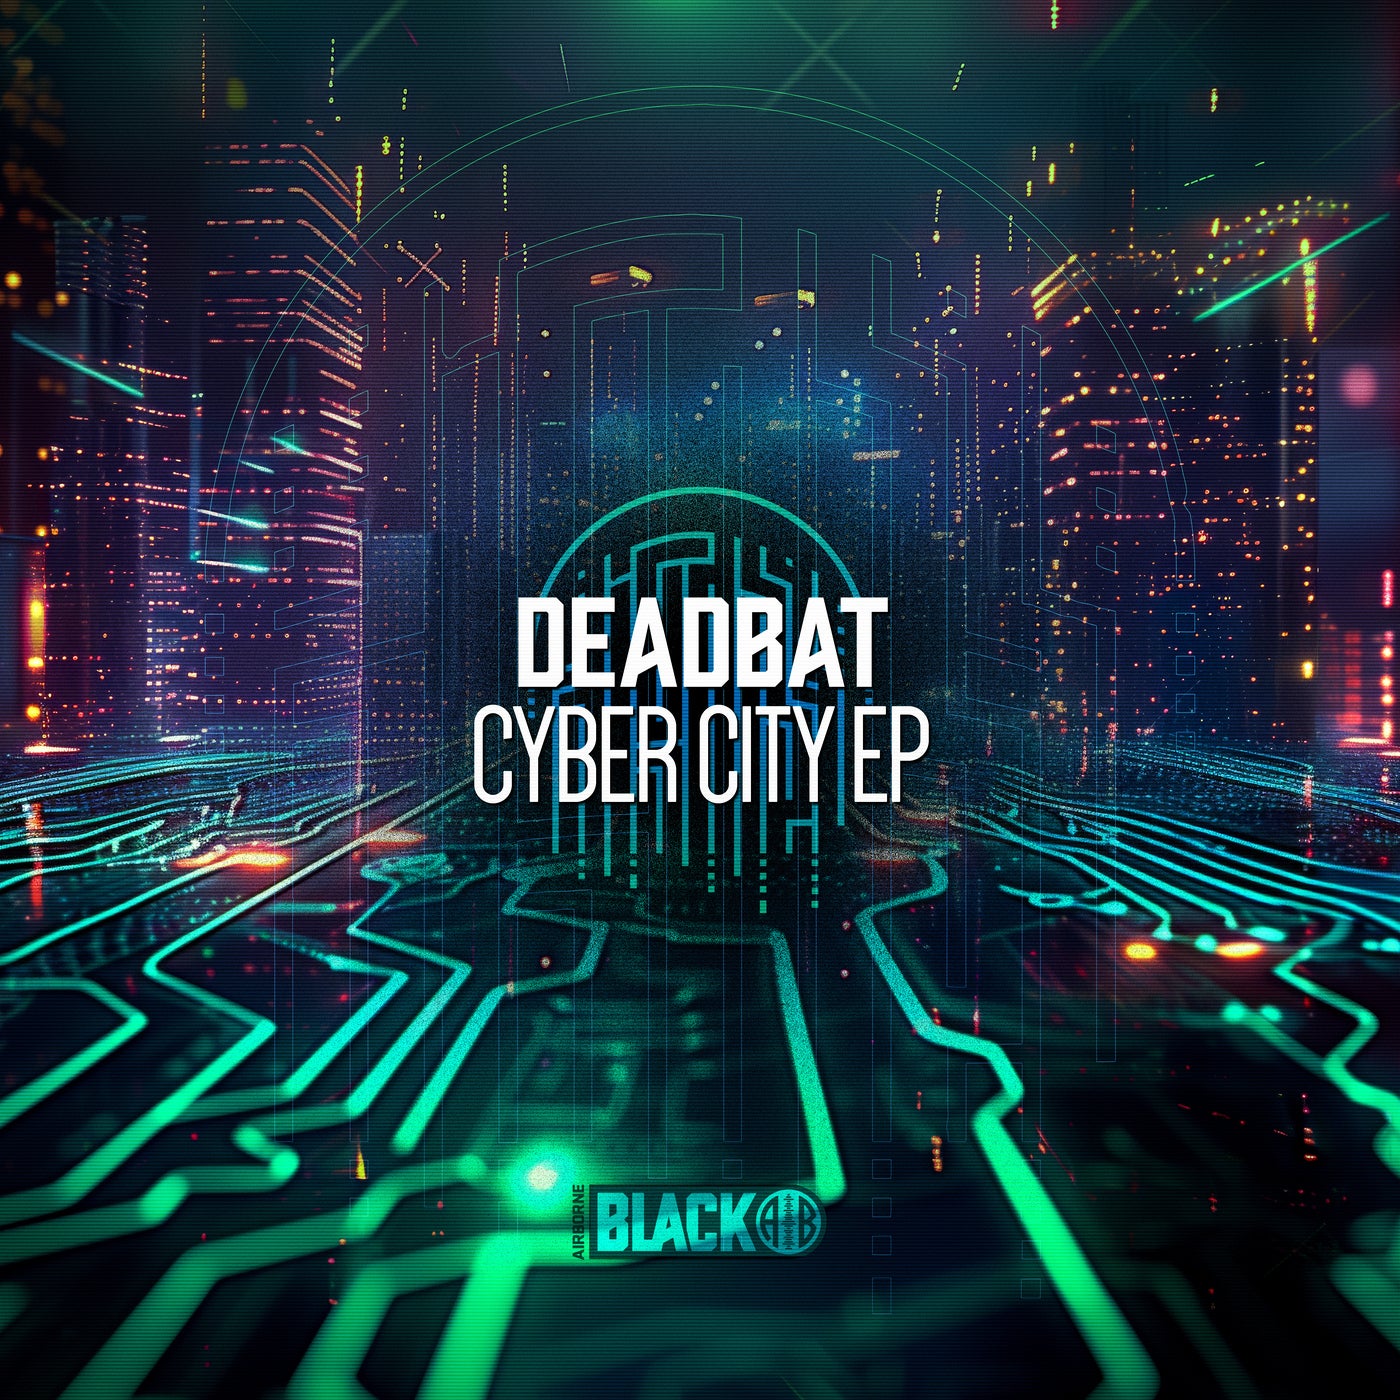 image cover: DeadBat - Cyber City EP on Airborne Black